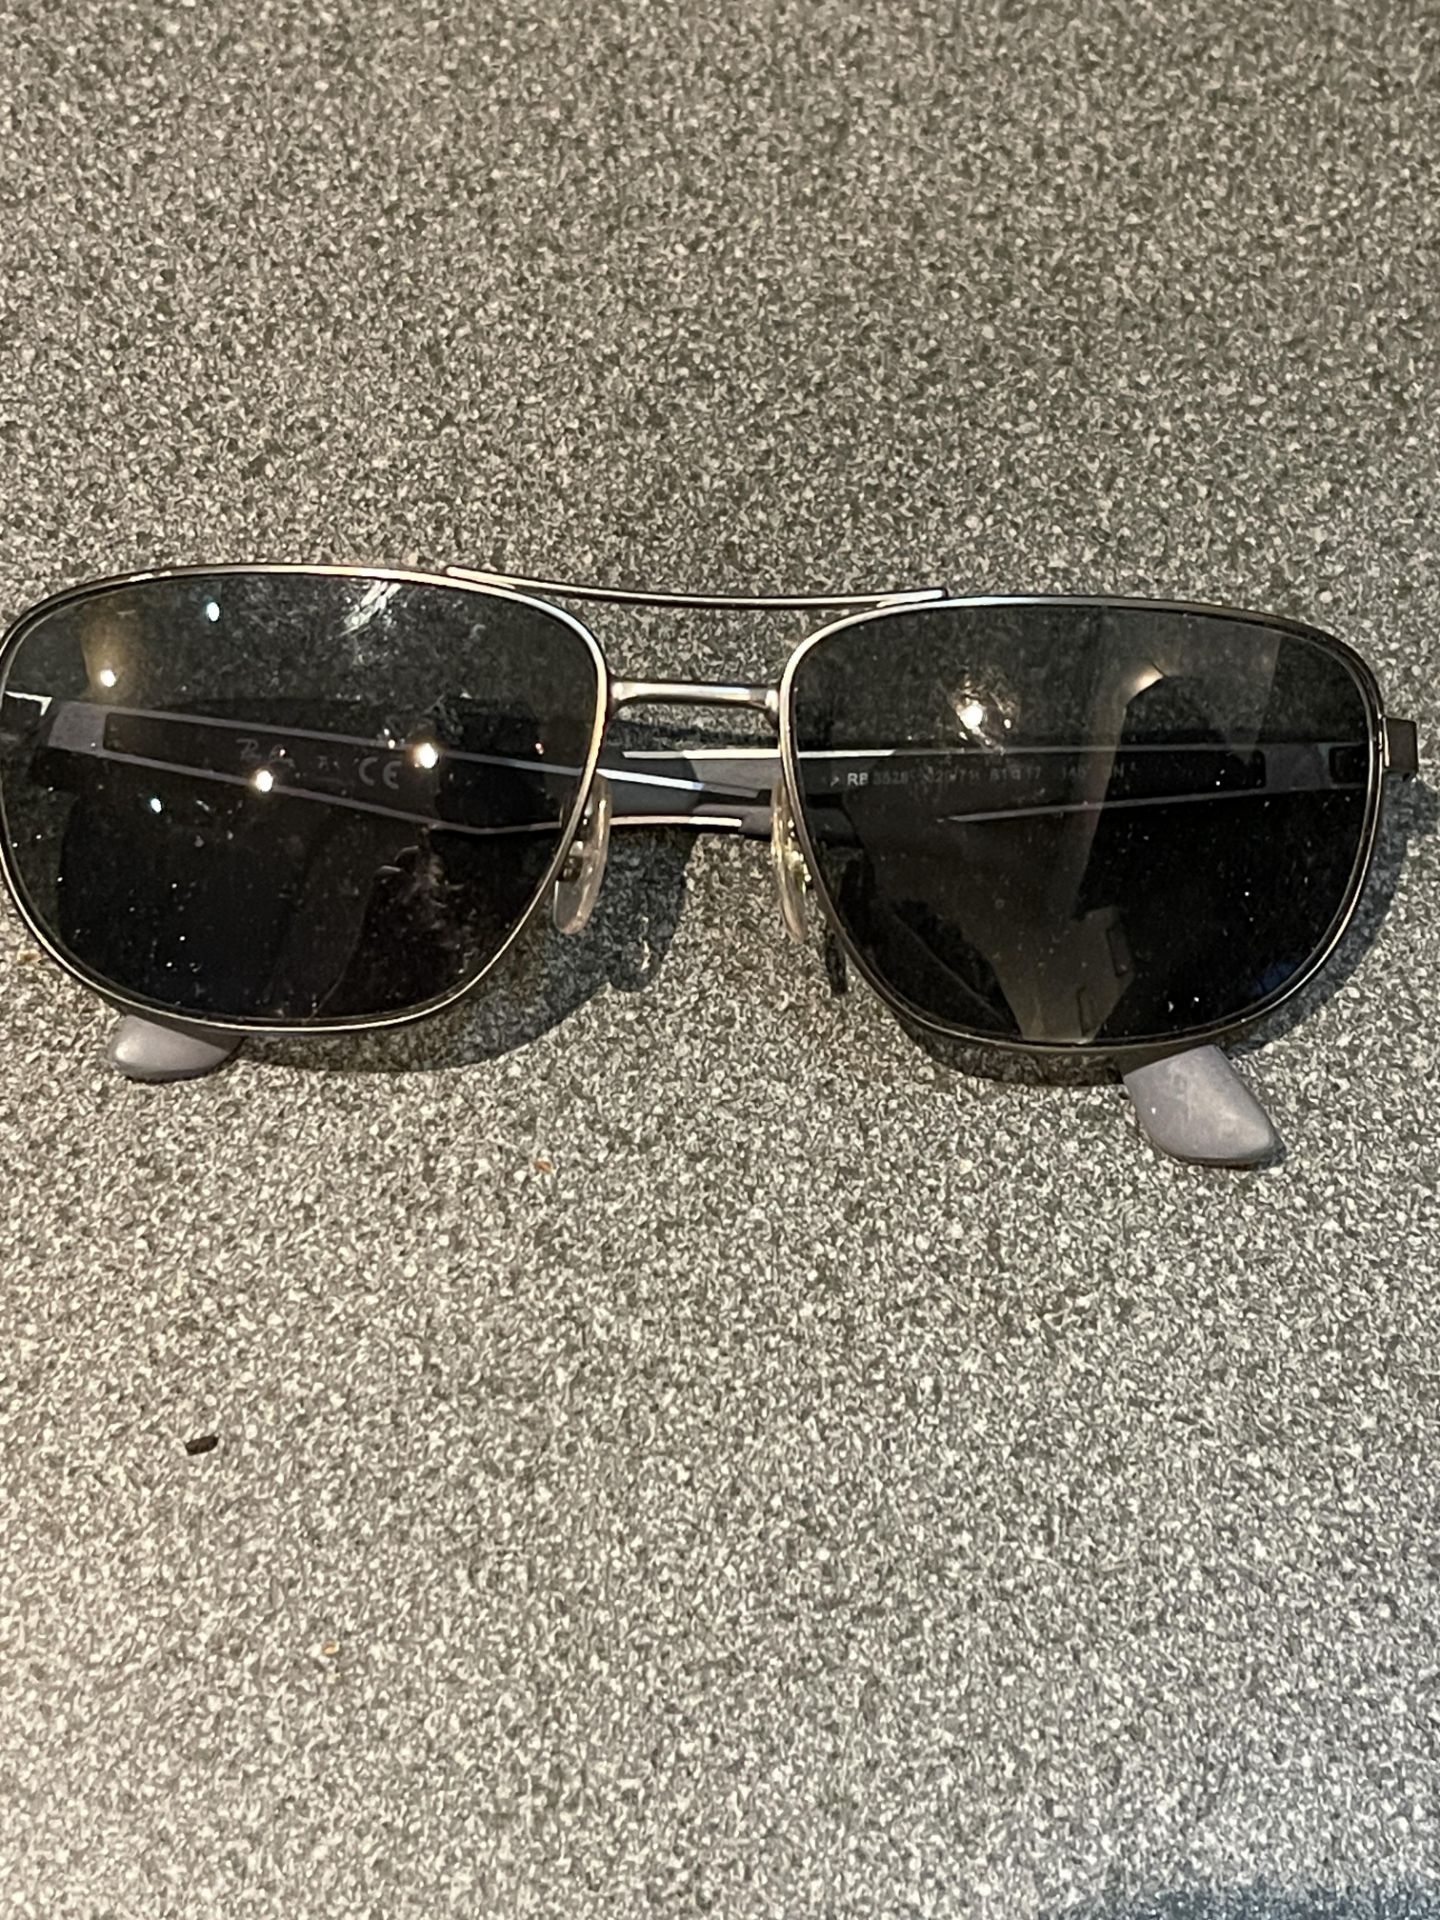 Ray Ban Sunglasses Display - Image 2 of 3